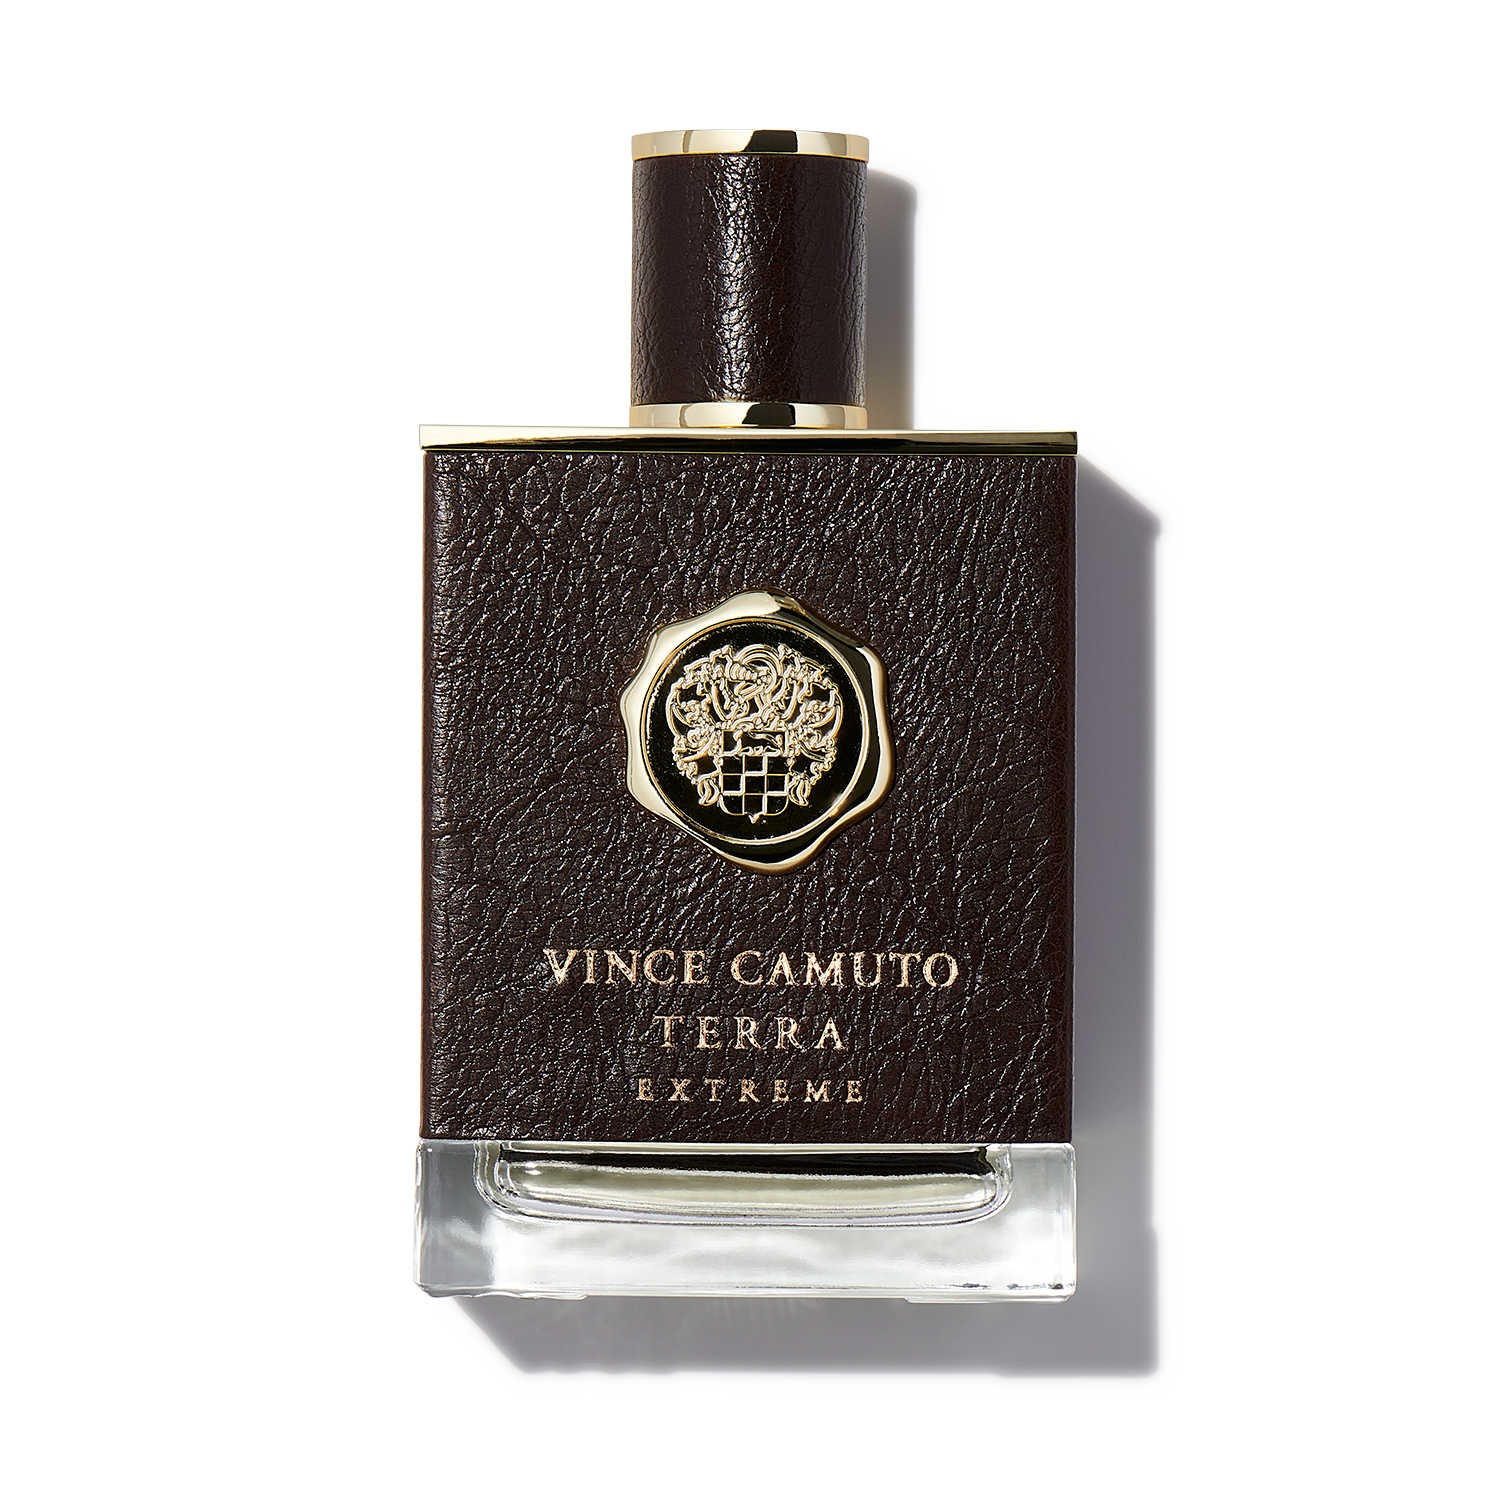 Vince Camuto Terra Extreme 3 Pc Set, 3.4 oz. EDP + deodorant and